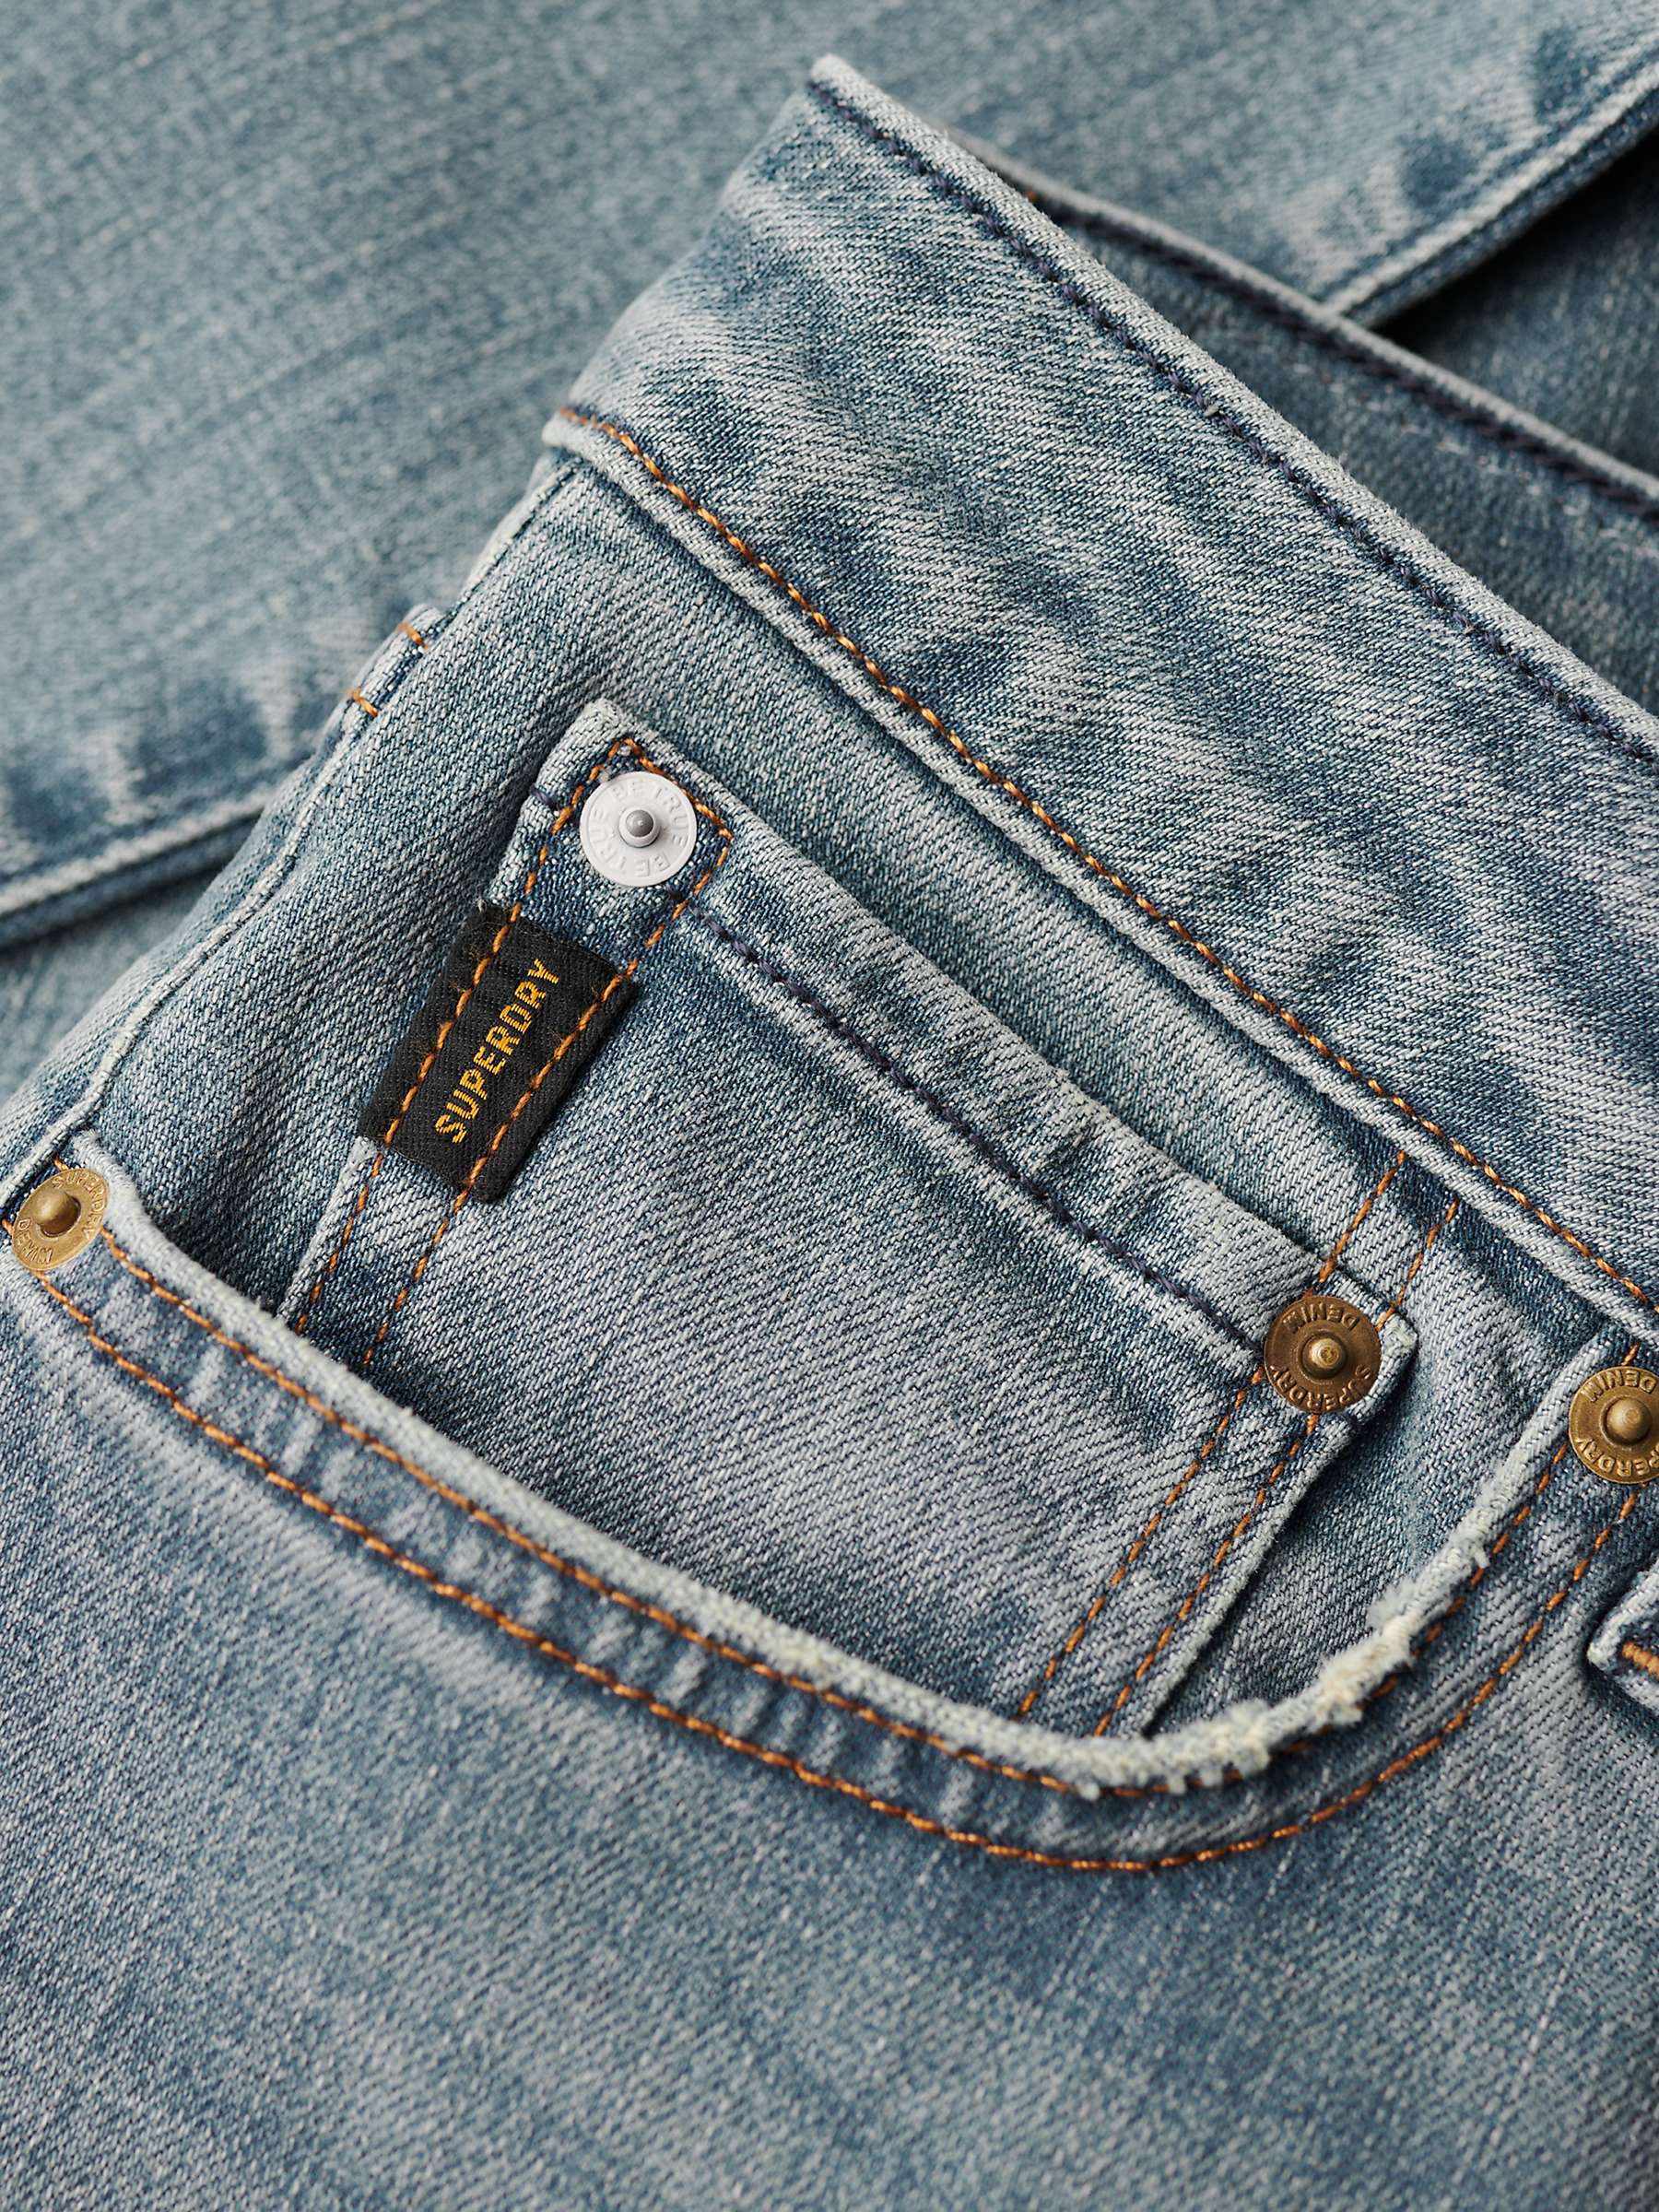 Buy Superdry Vintage Slim Fit Jeans Online at johnlewis.com